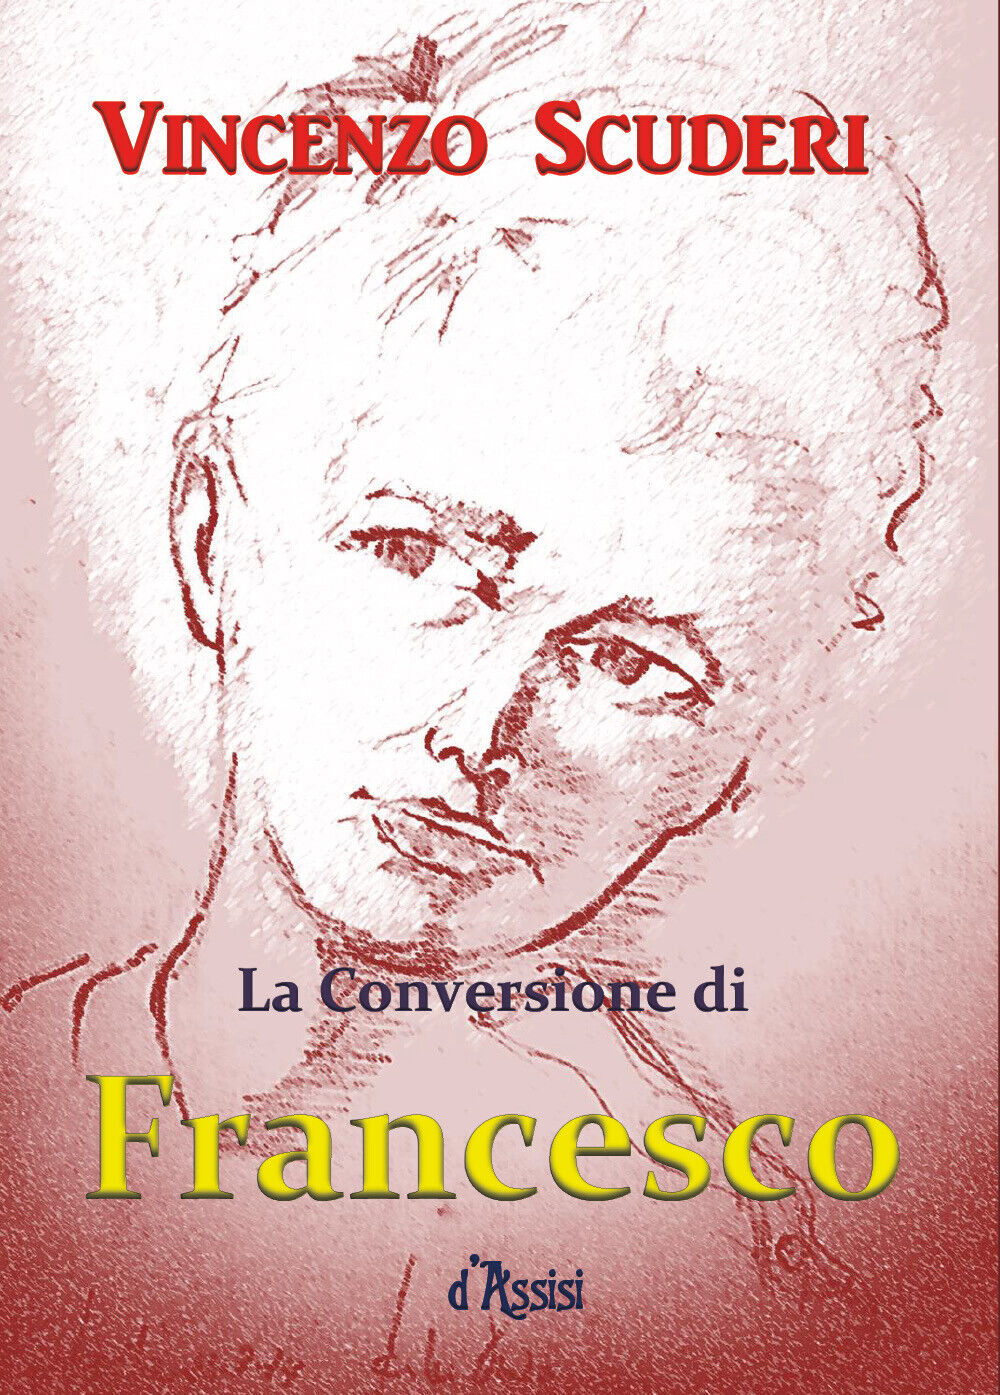 La Conversione di Francesco d'Assisi  di Vincenzo Scuderi,  2018,  Youcanprint